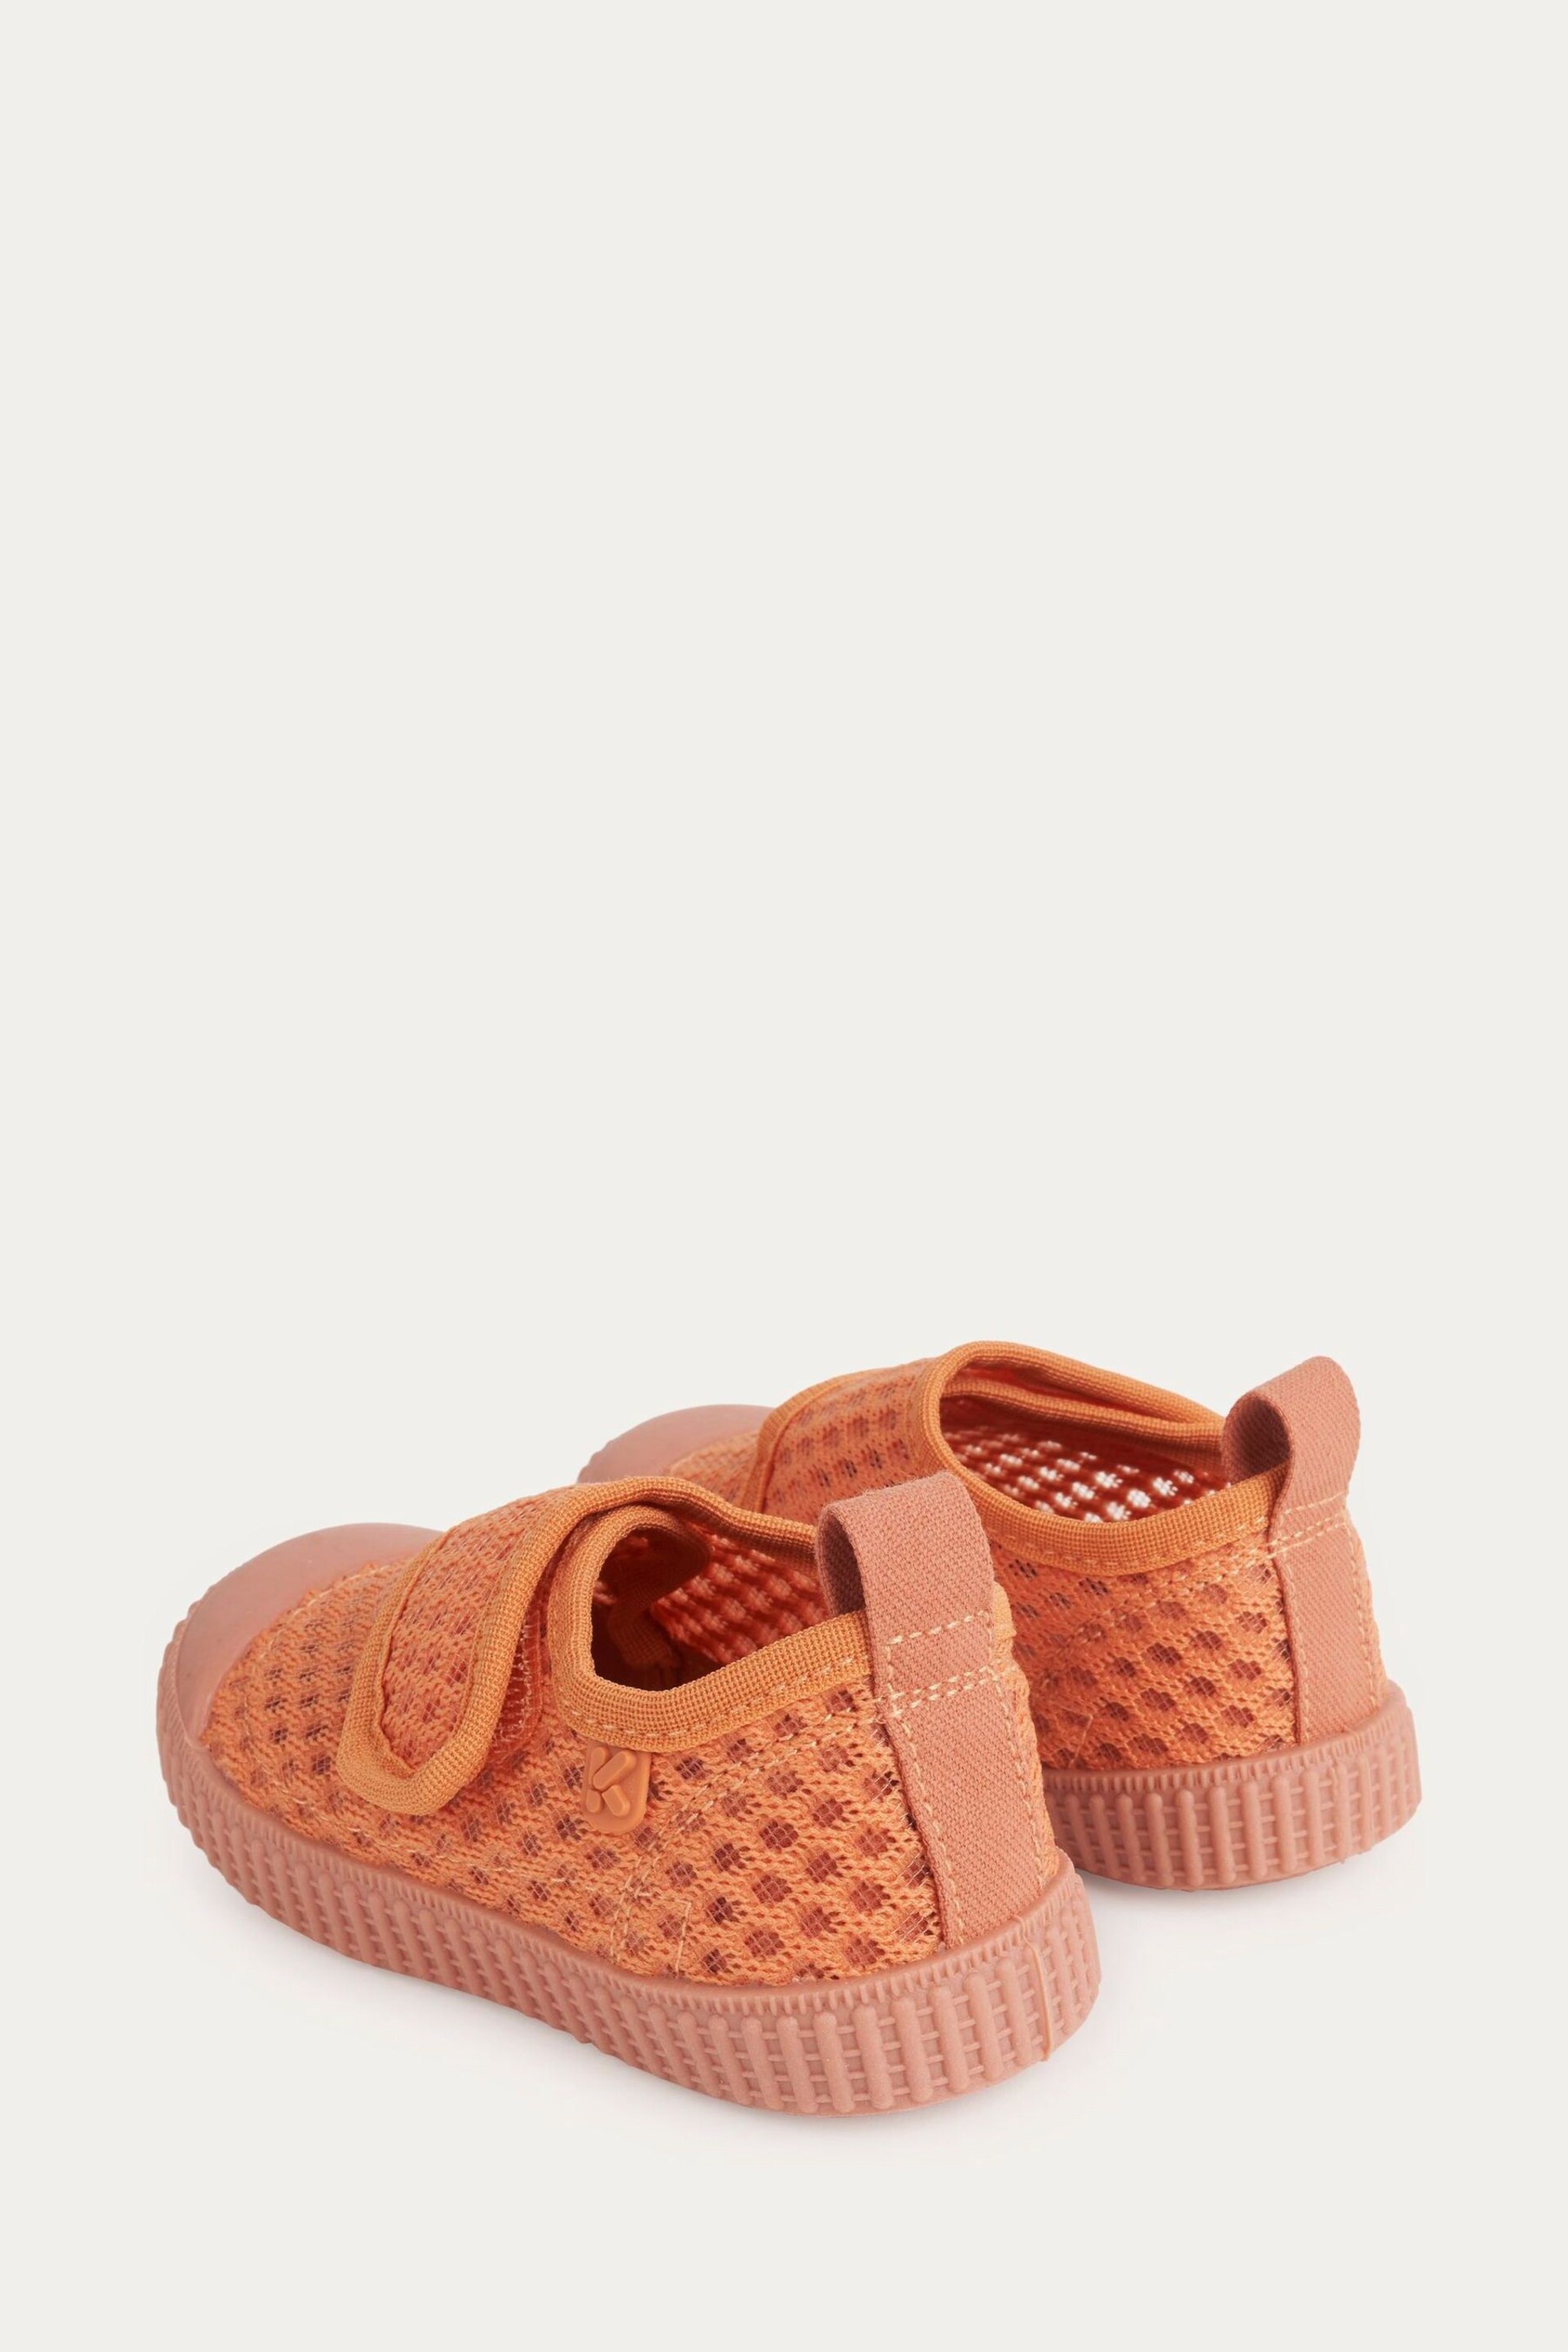 KIDLY Orange Mesh Swim Shoes - Image 4 of 4